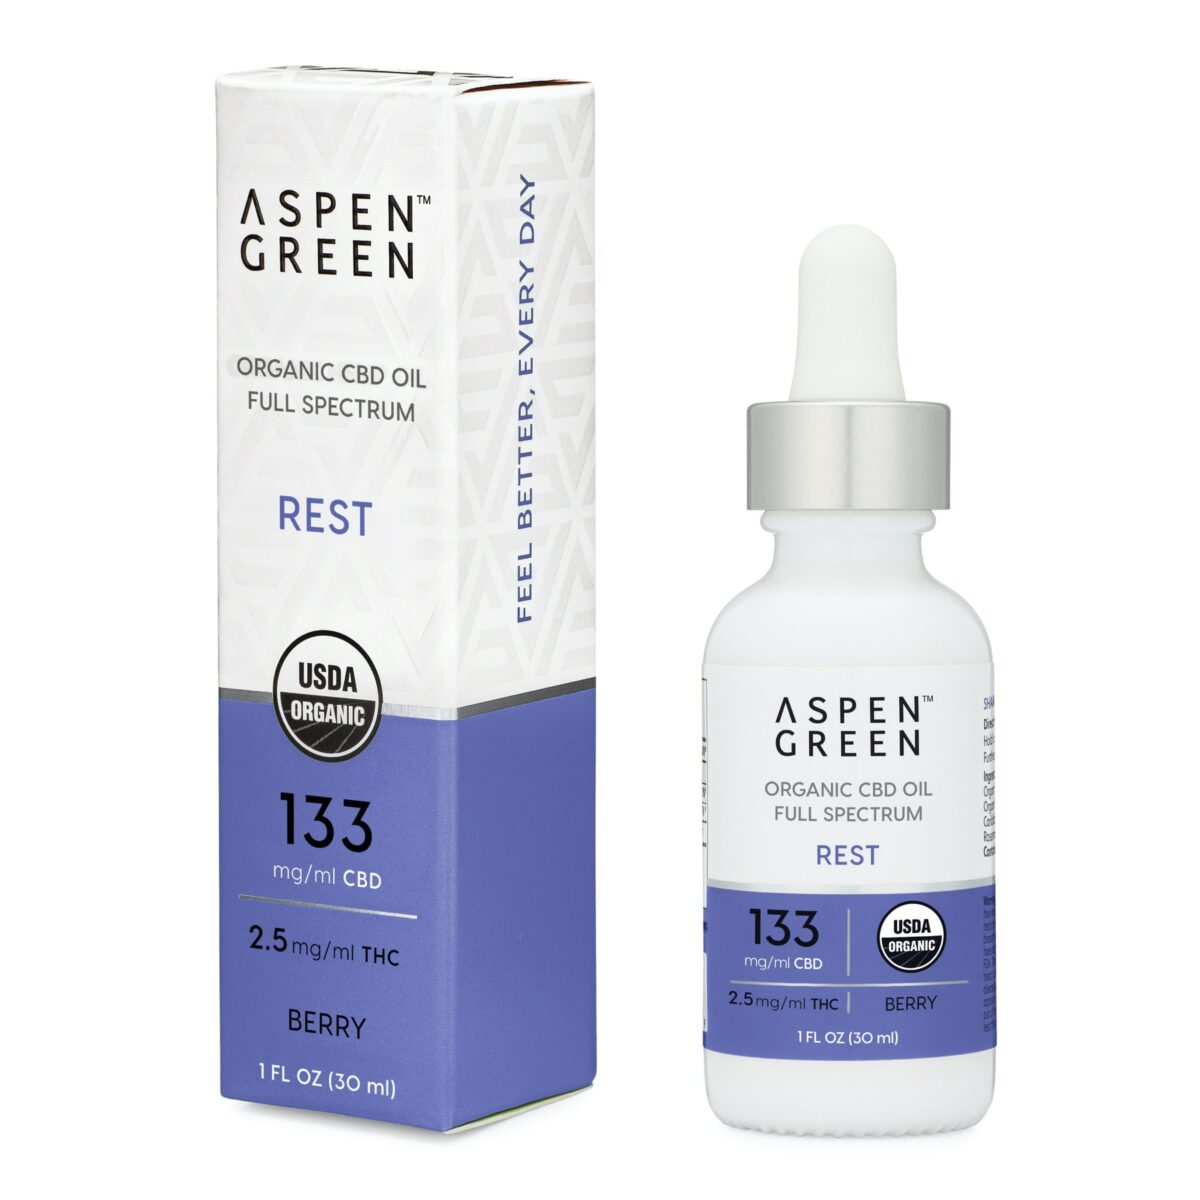 Aspen Green USDA Certified Organic CBD Oil with box, Rest (133mg/ml CBD), Berry Flavor